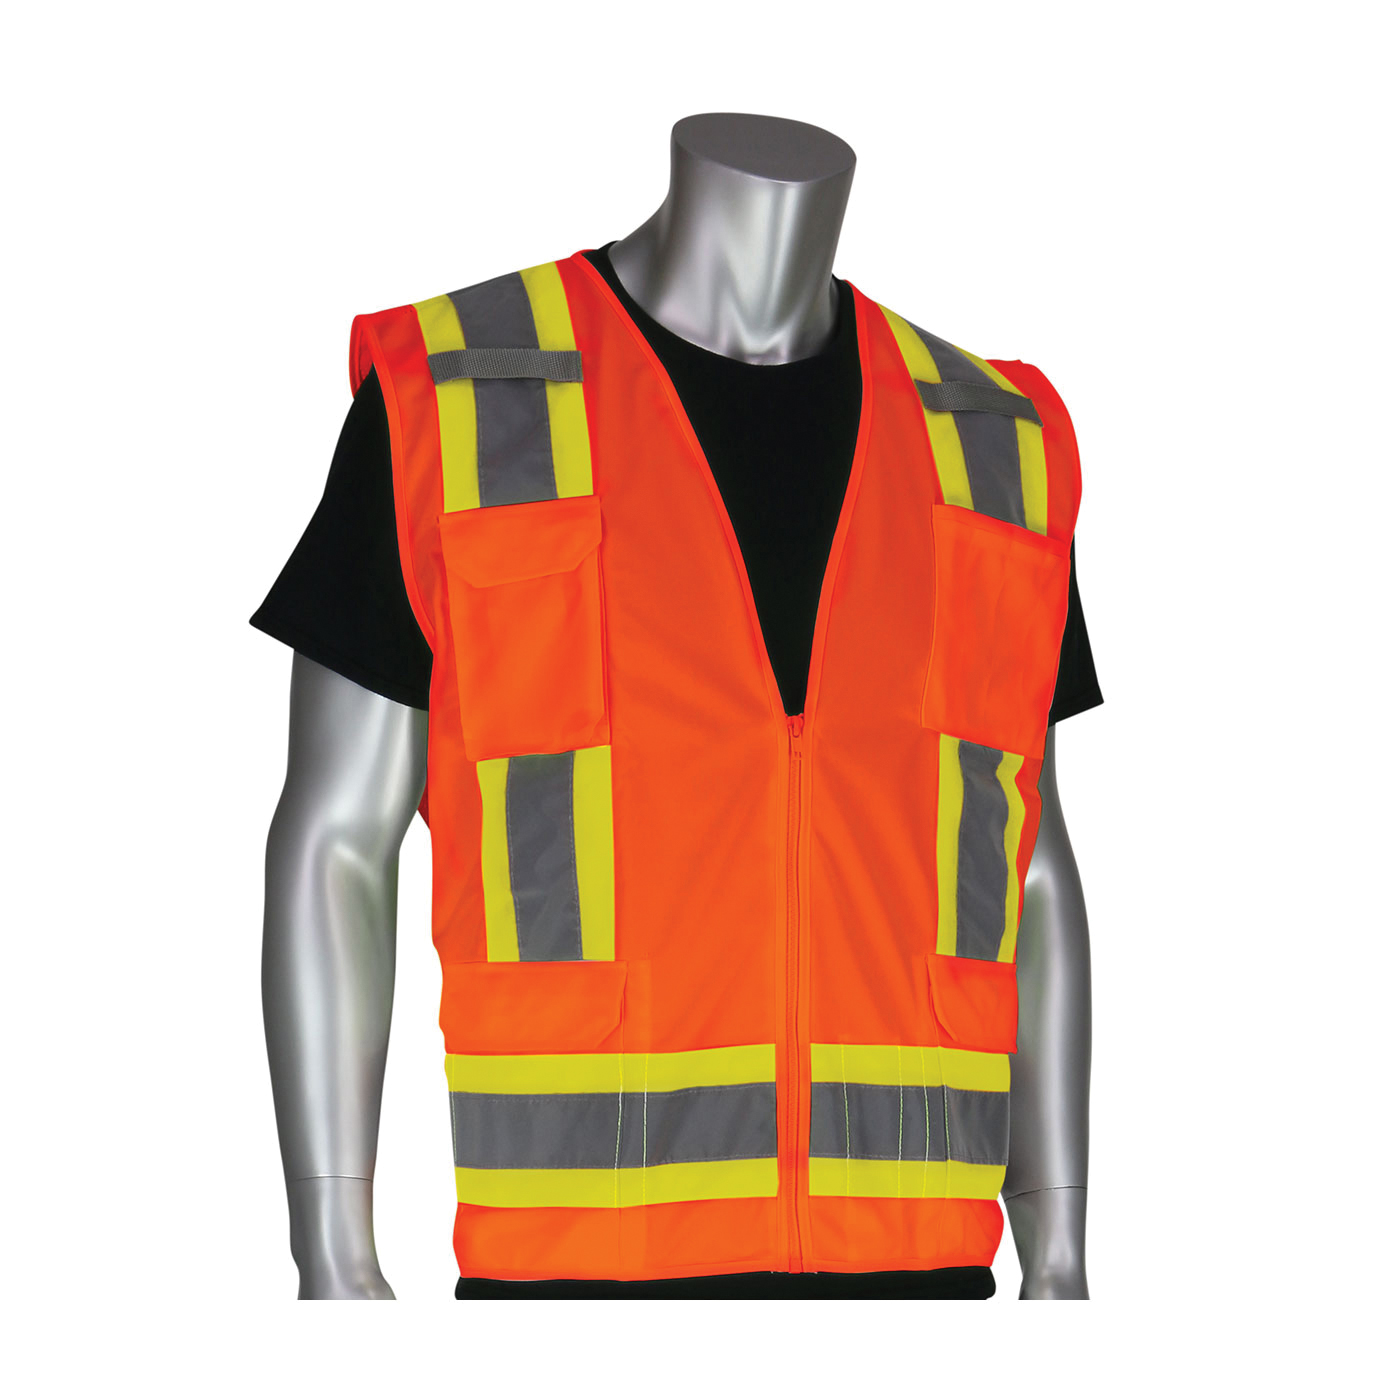 PIP® 302-0500-ORG/S 2-Tone Surveyor Safety Vest, S, Hi-Viz Orange, Polyester/Solid Tricot, Zipper Closure, 11 Pockets, ANSI Class: Class 2, Specifications Met: ANSI 107 Type R